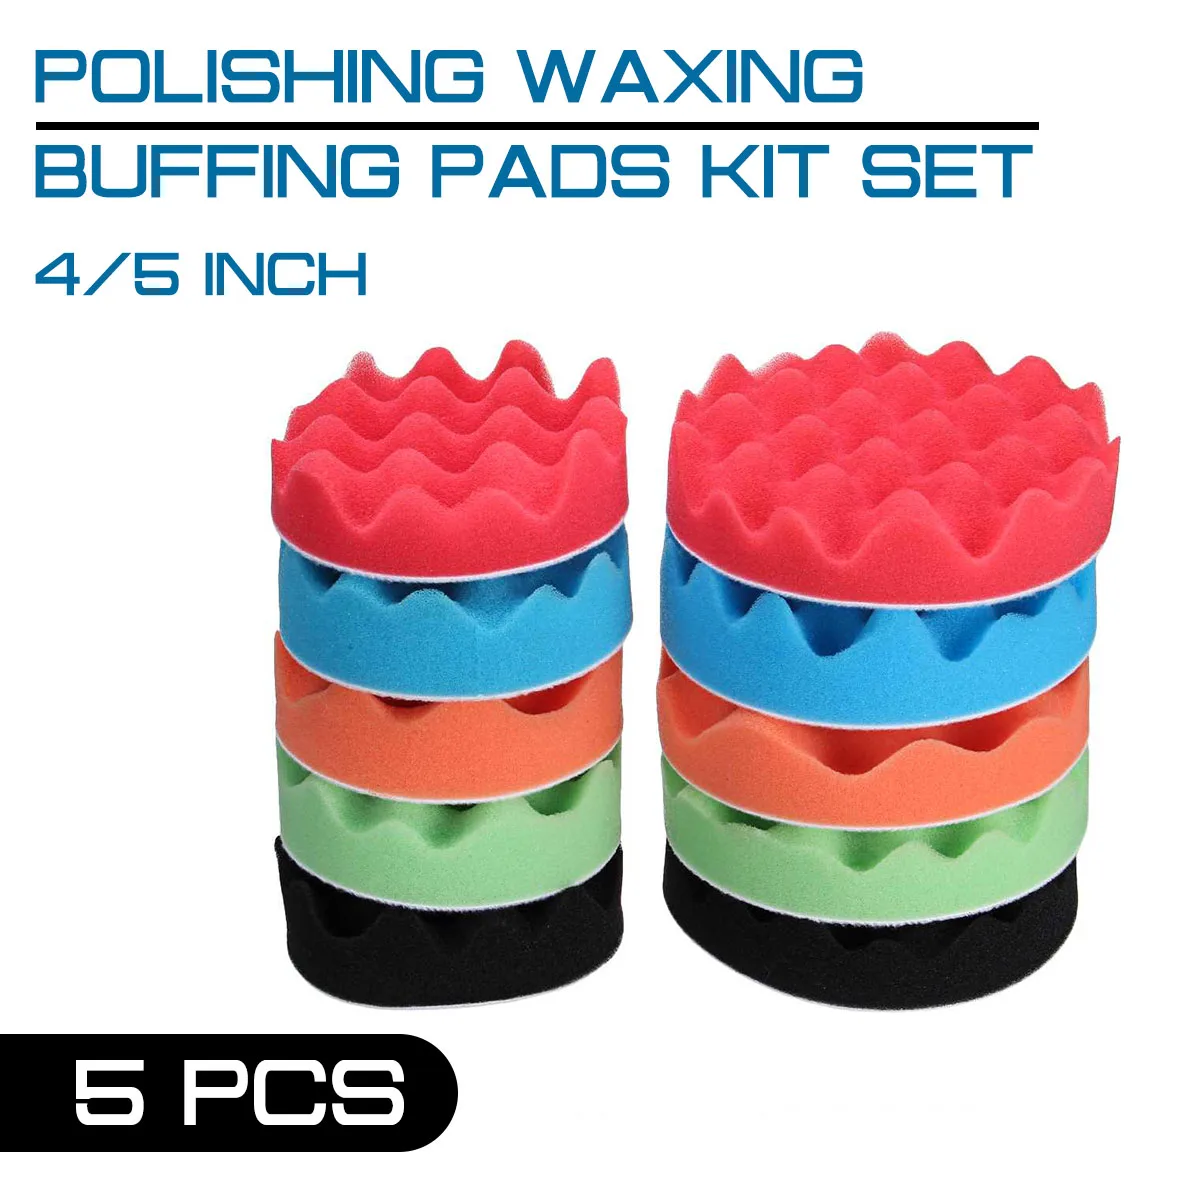 

5Pcs 4"/5" Sponge Polishing Waxing Buffing Pads Kit Set Compound For Auto Car Furniture